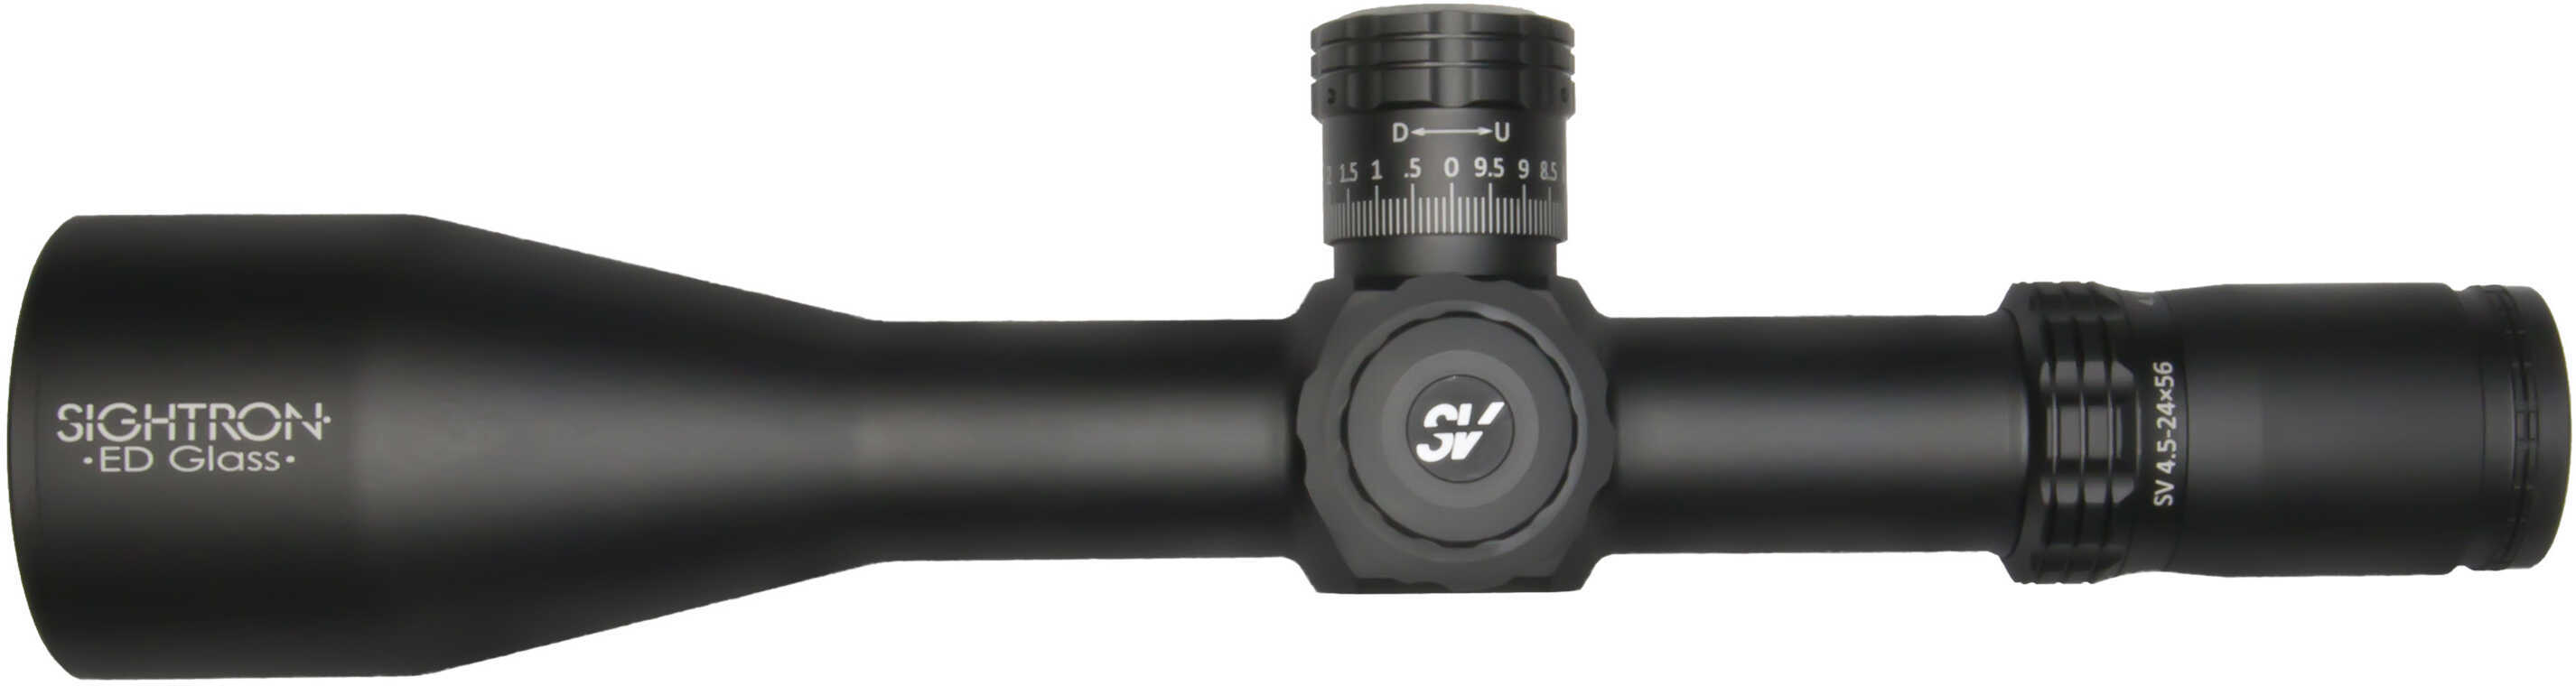 Sightron SV Riflescope, 4.5-24x56nnm 34mm Main Tube, Matte Black